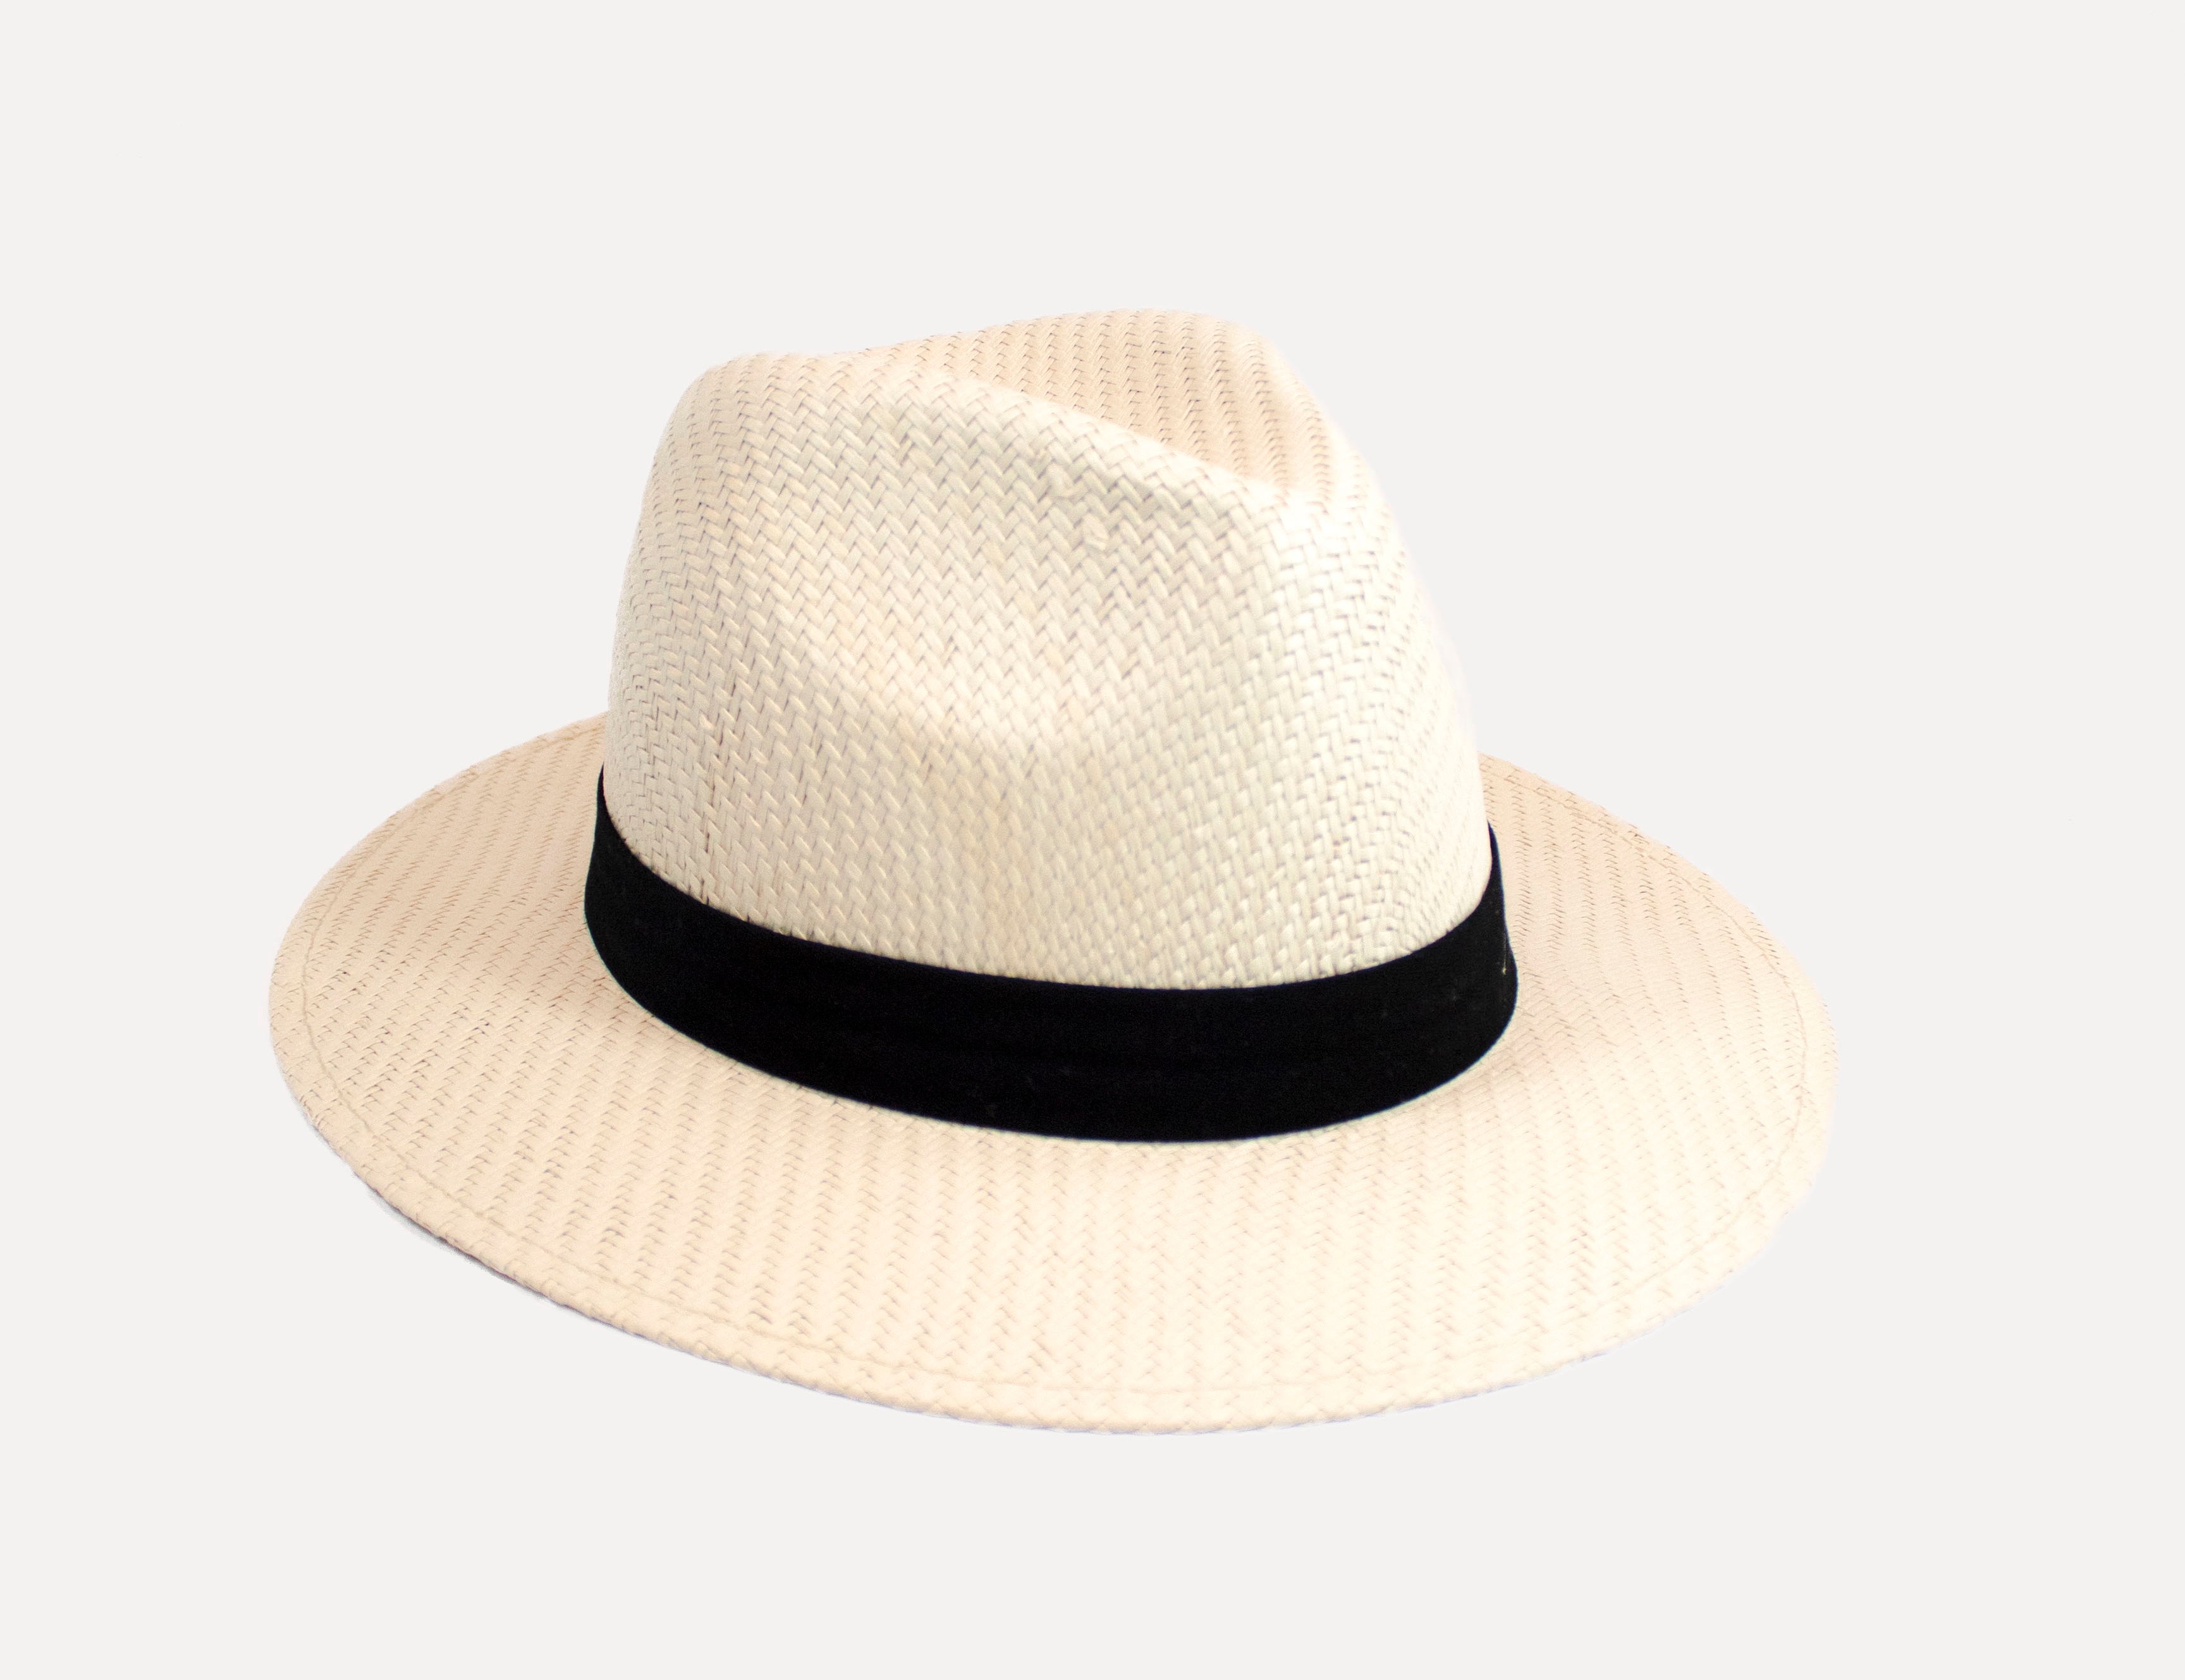 The Panama Hat